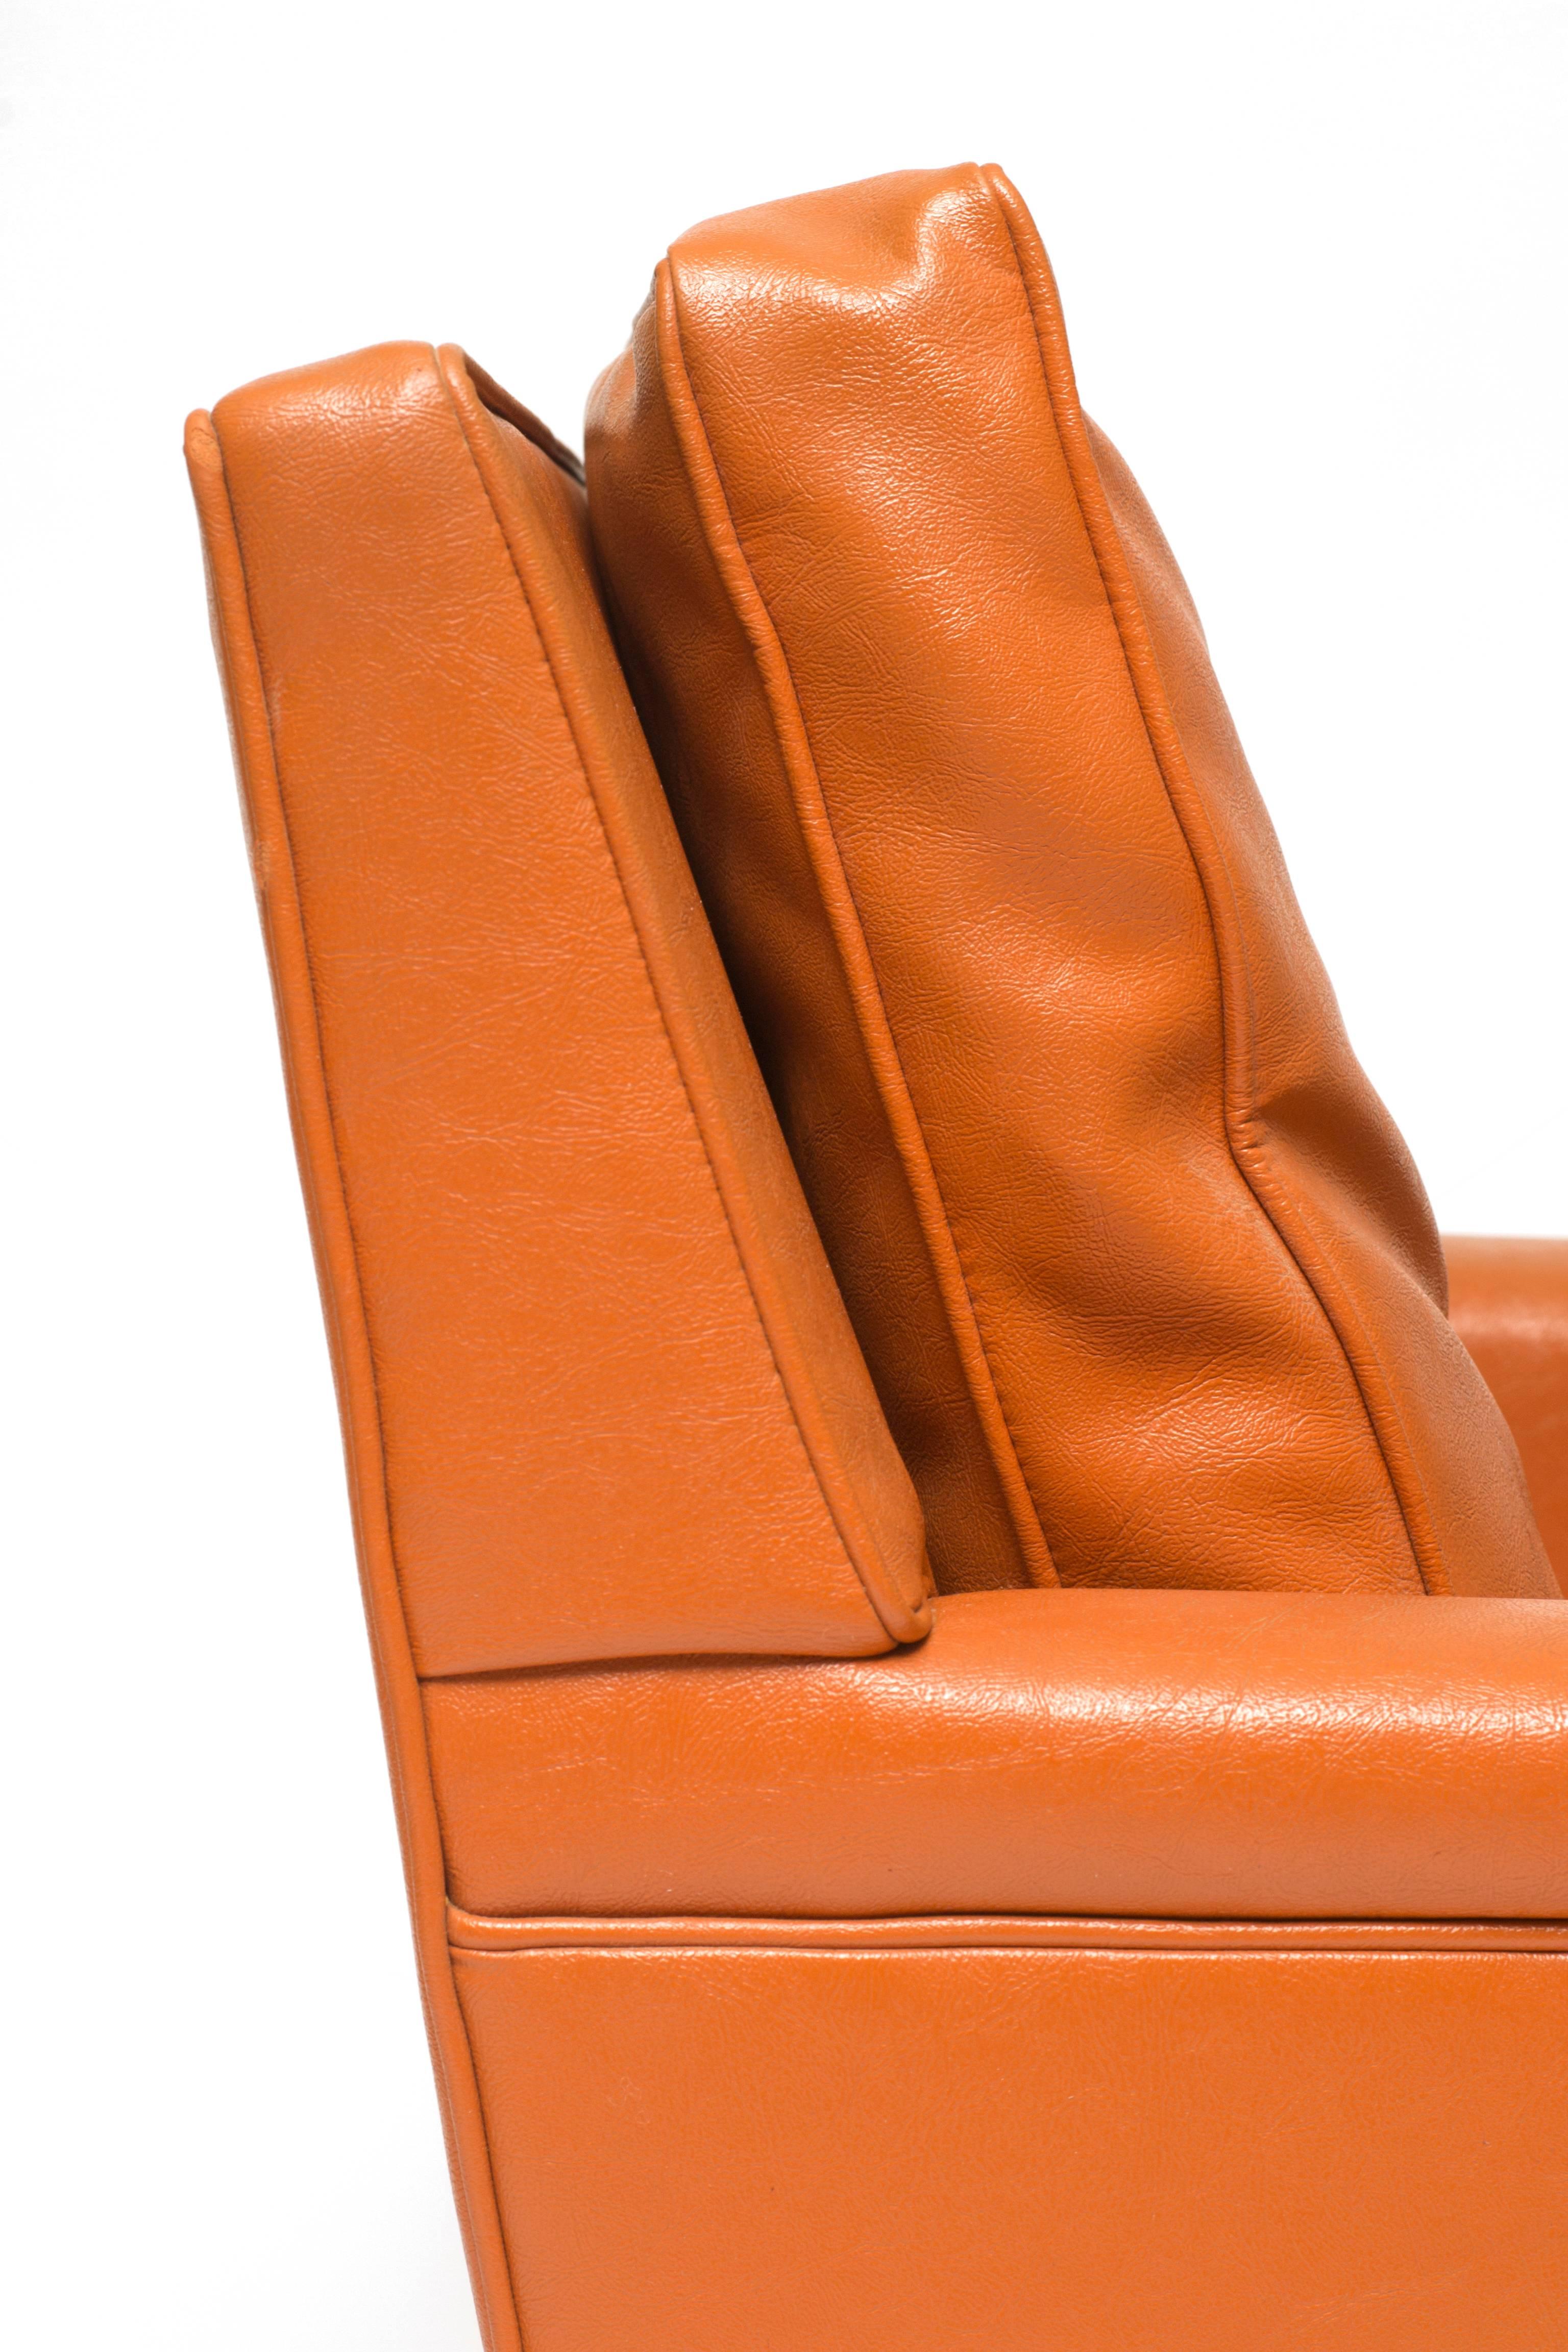 Milo Baughman Lounge Chair for Thayer Coggin For Sale 3